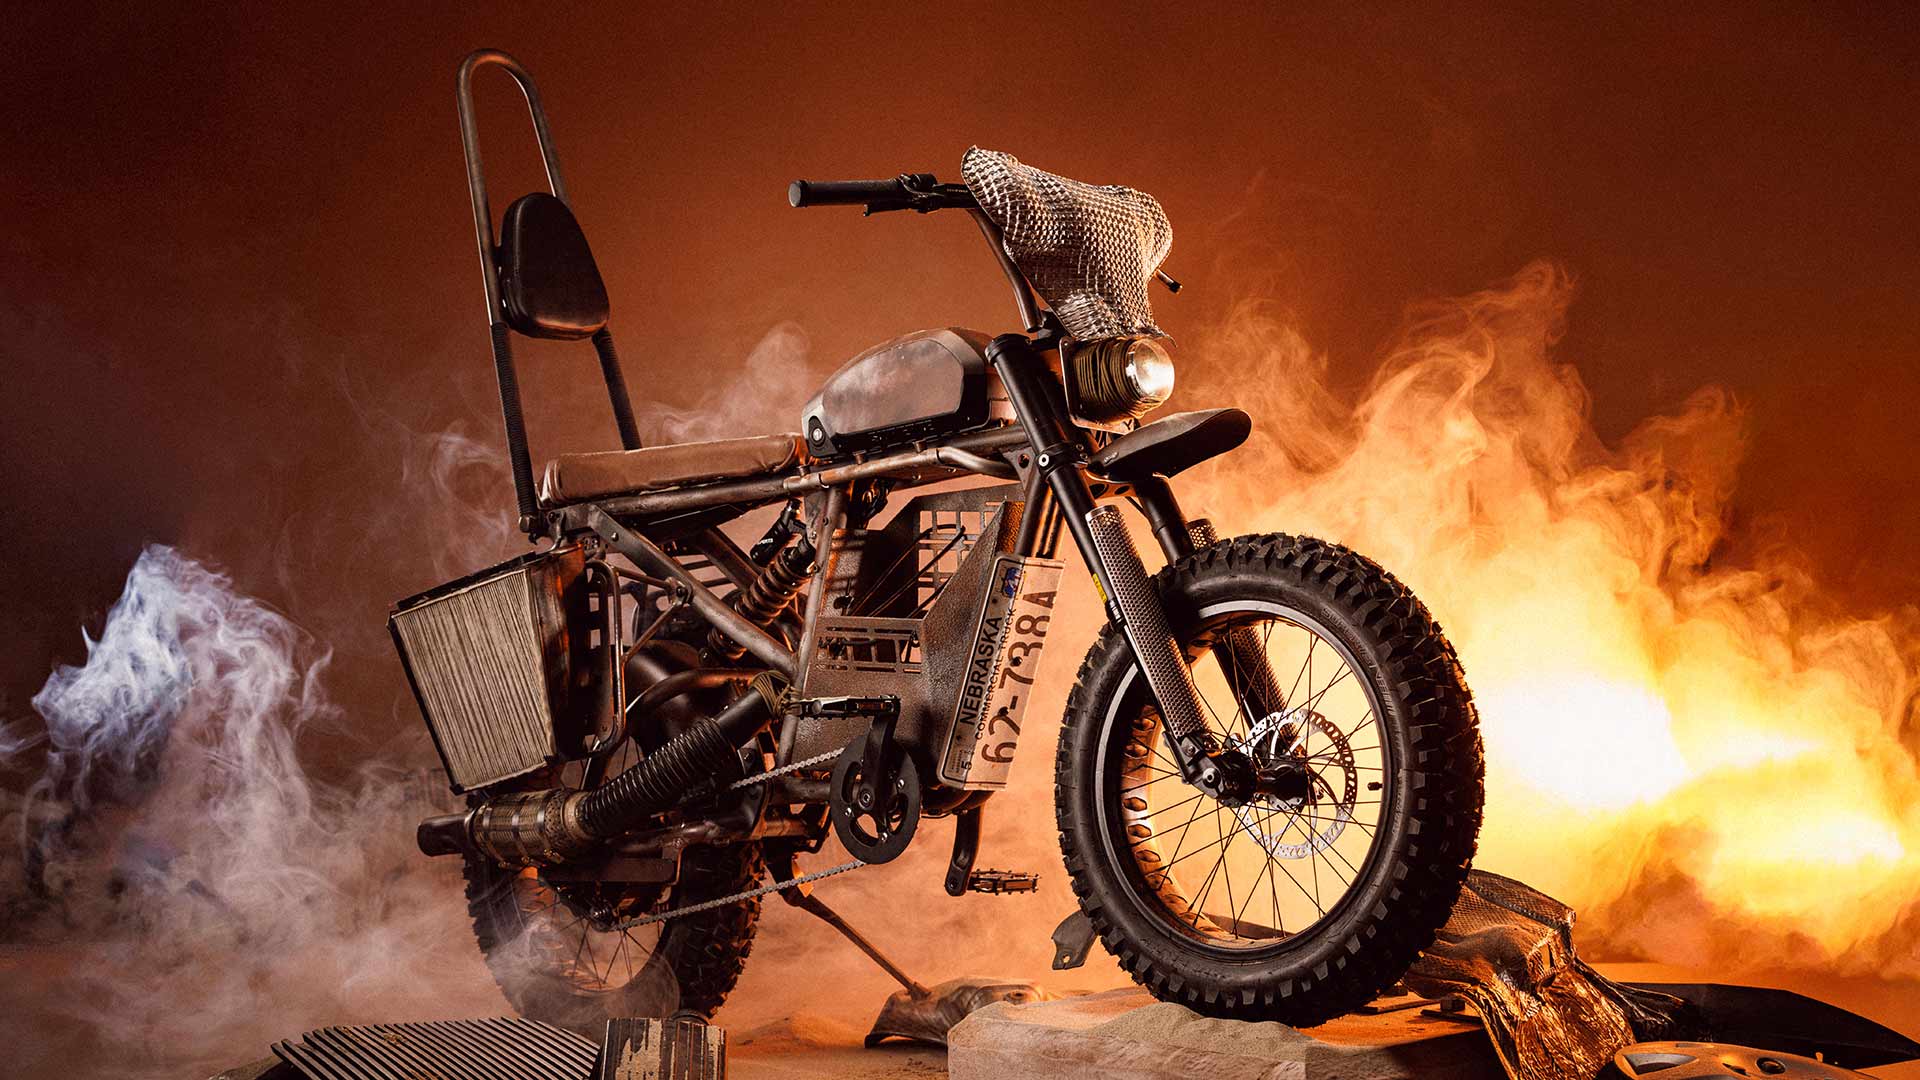 Stylized shot of a custom SUPER73 on a fiery background